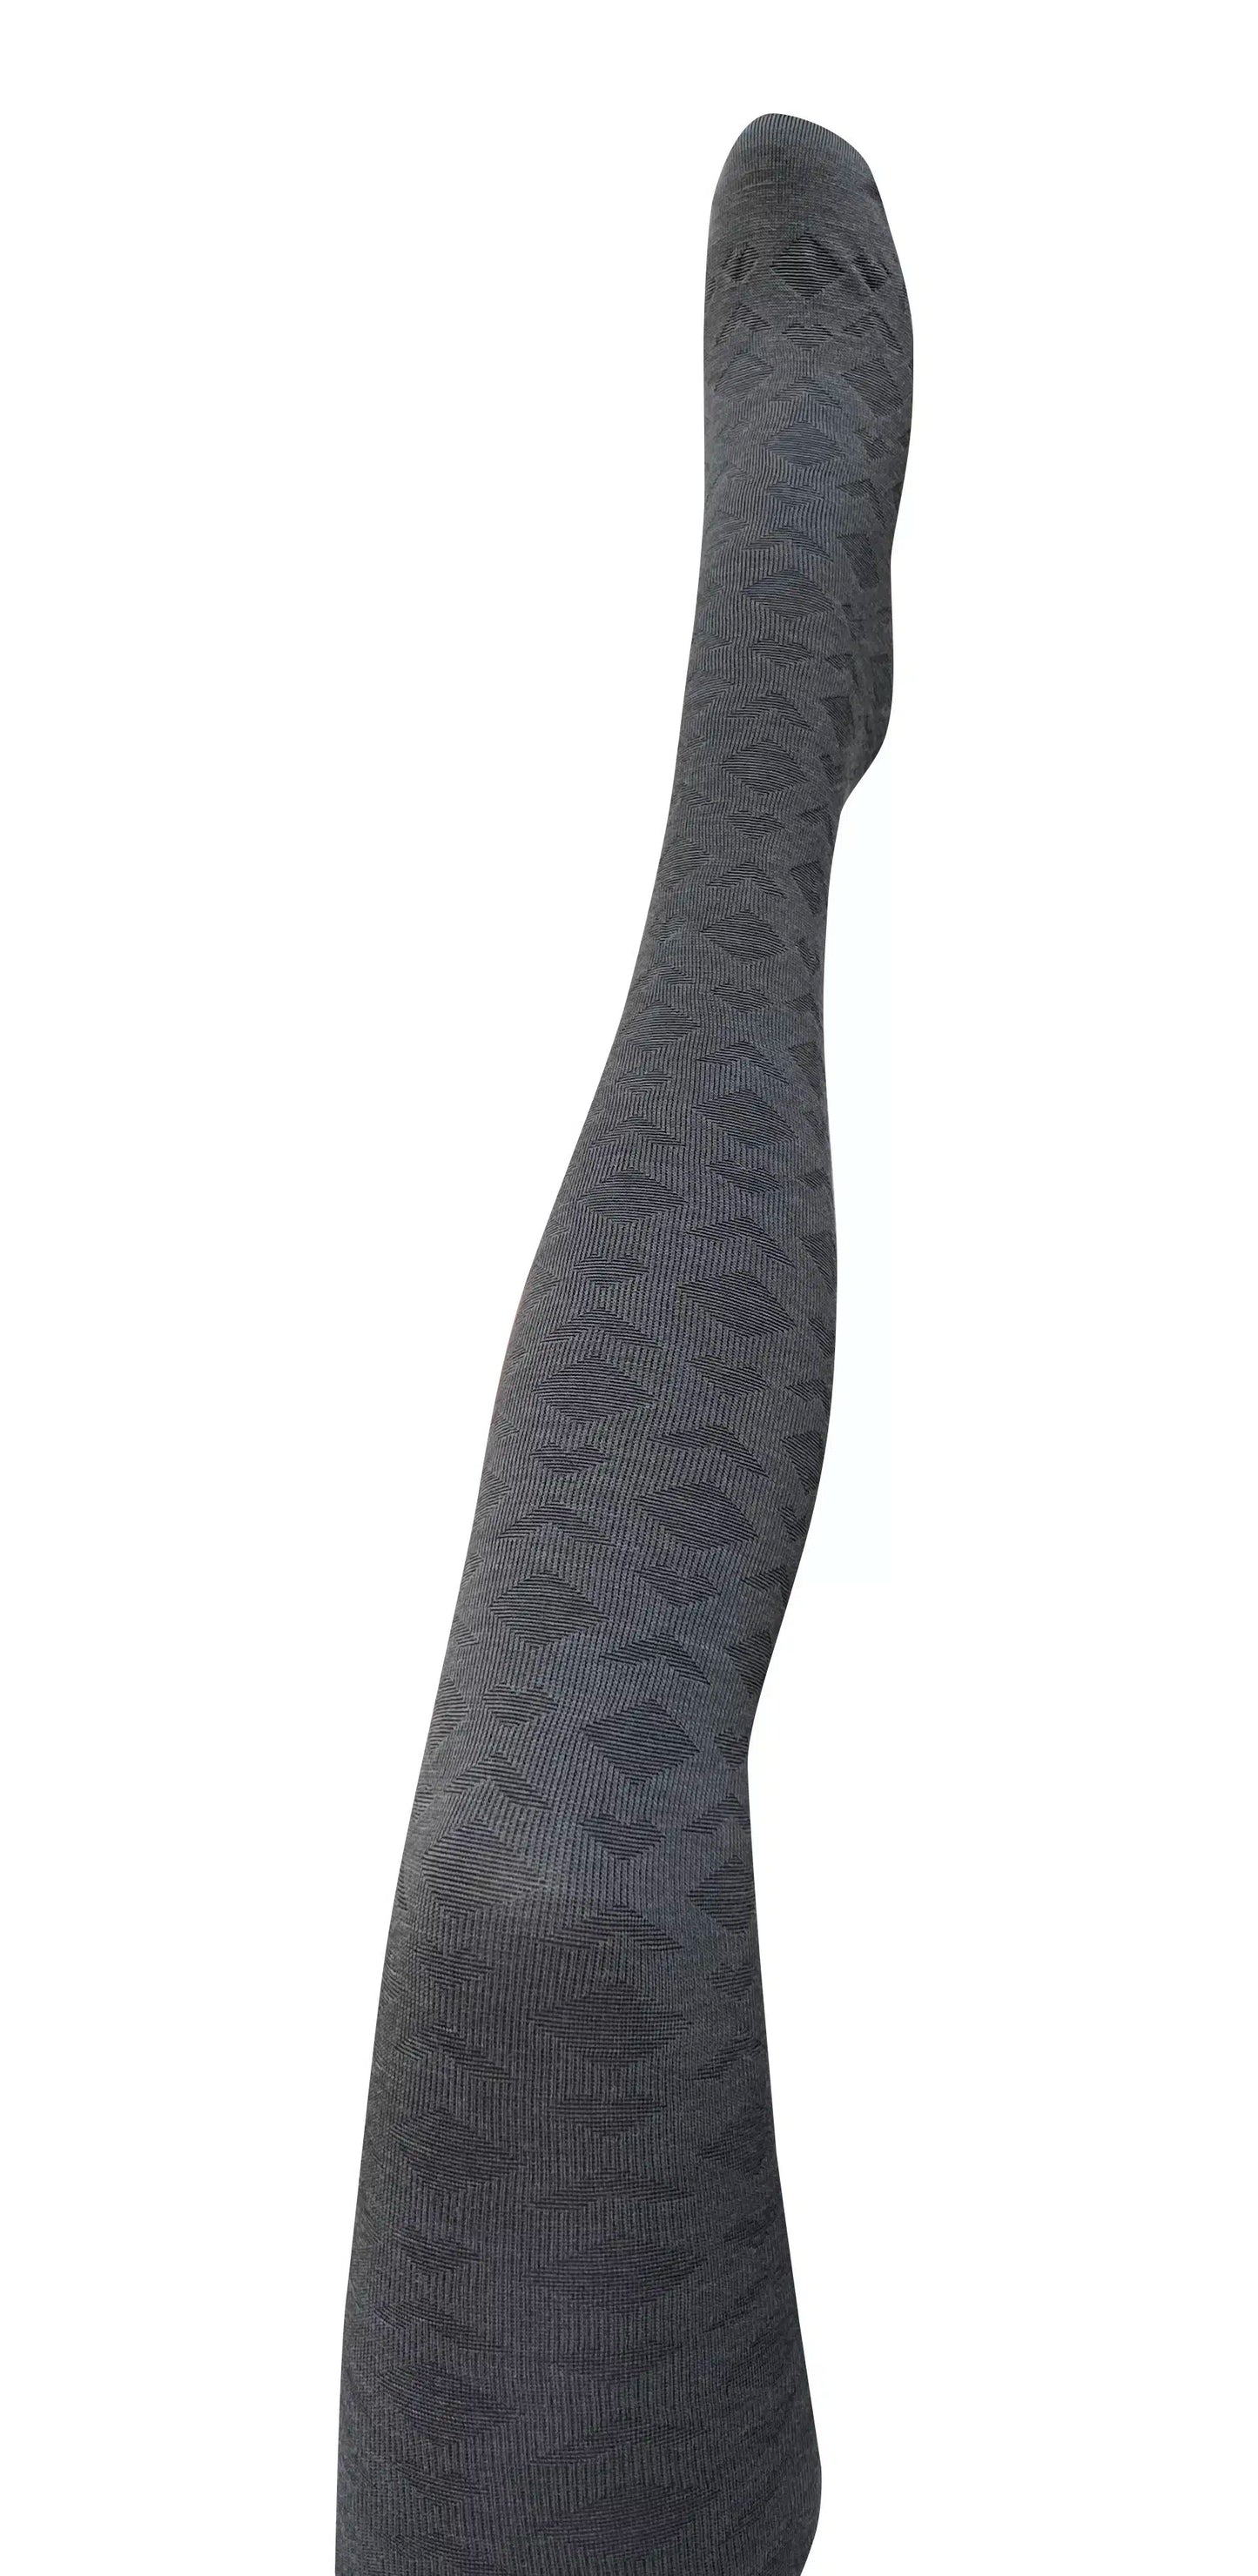 Tightology Deco Merino Wool Tights in Grey